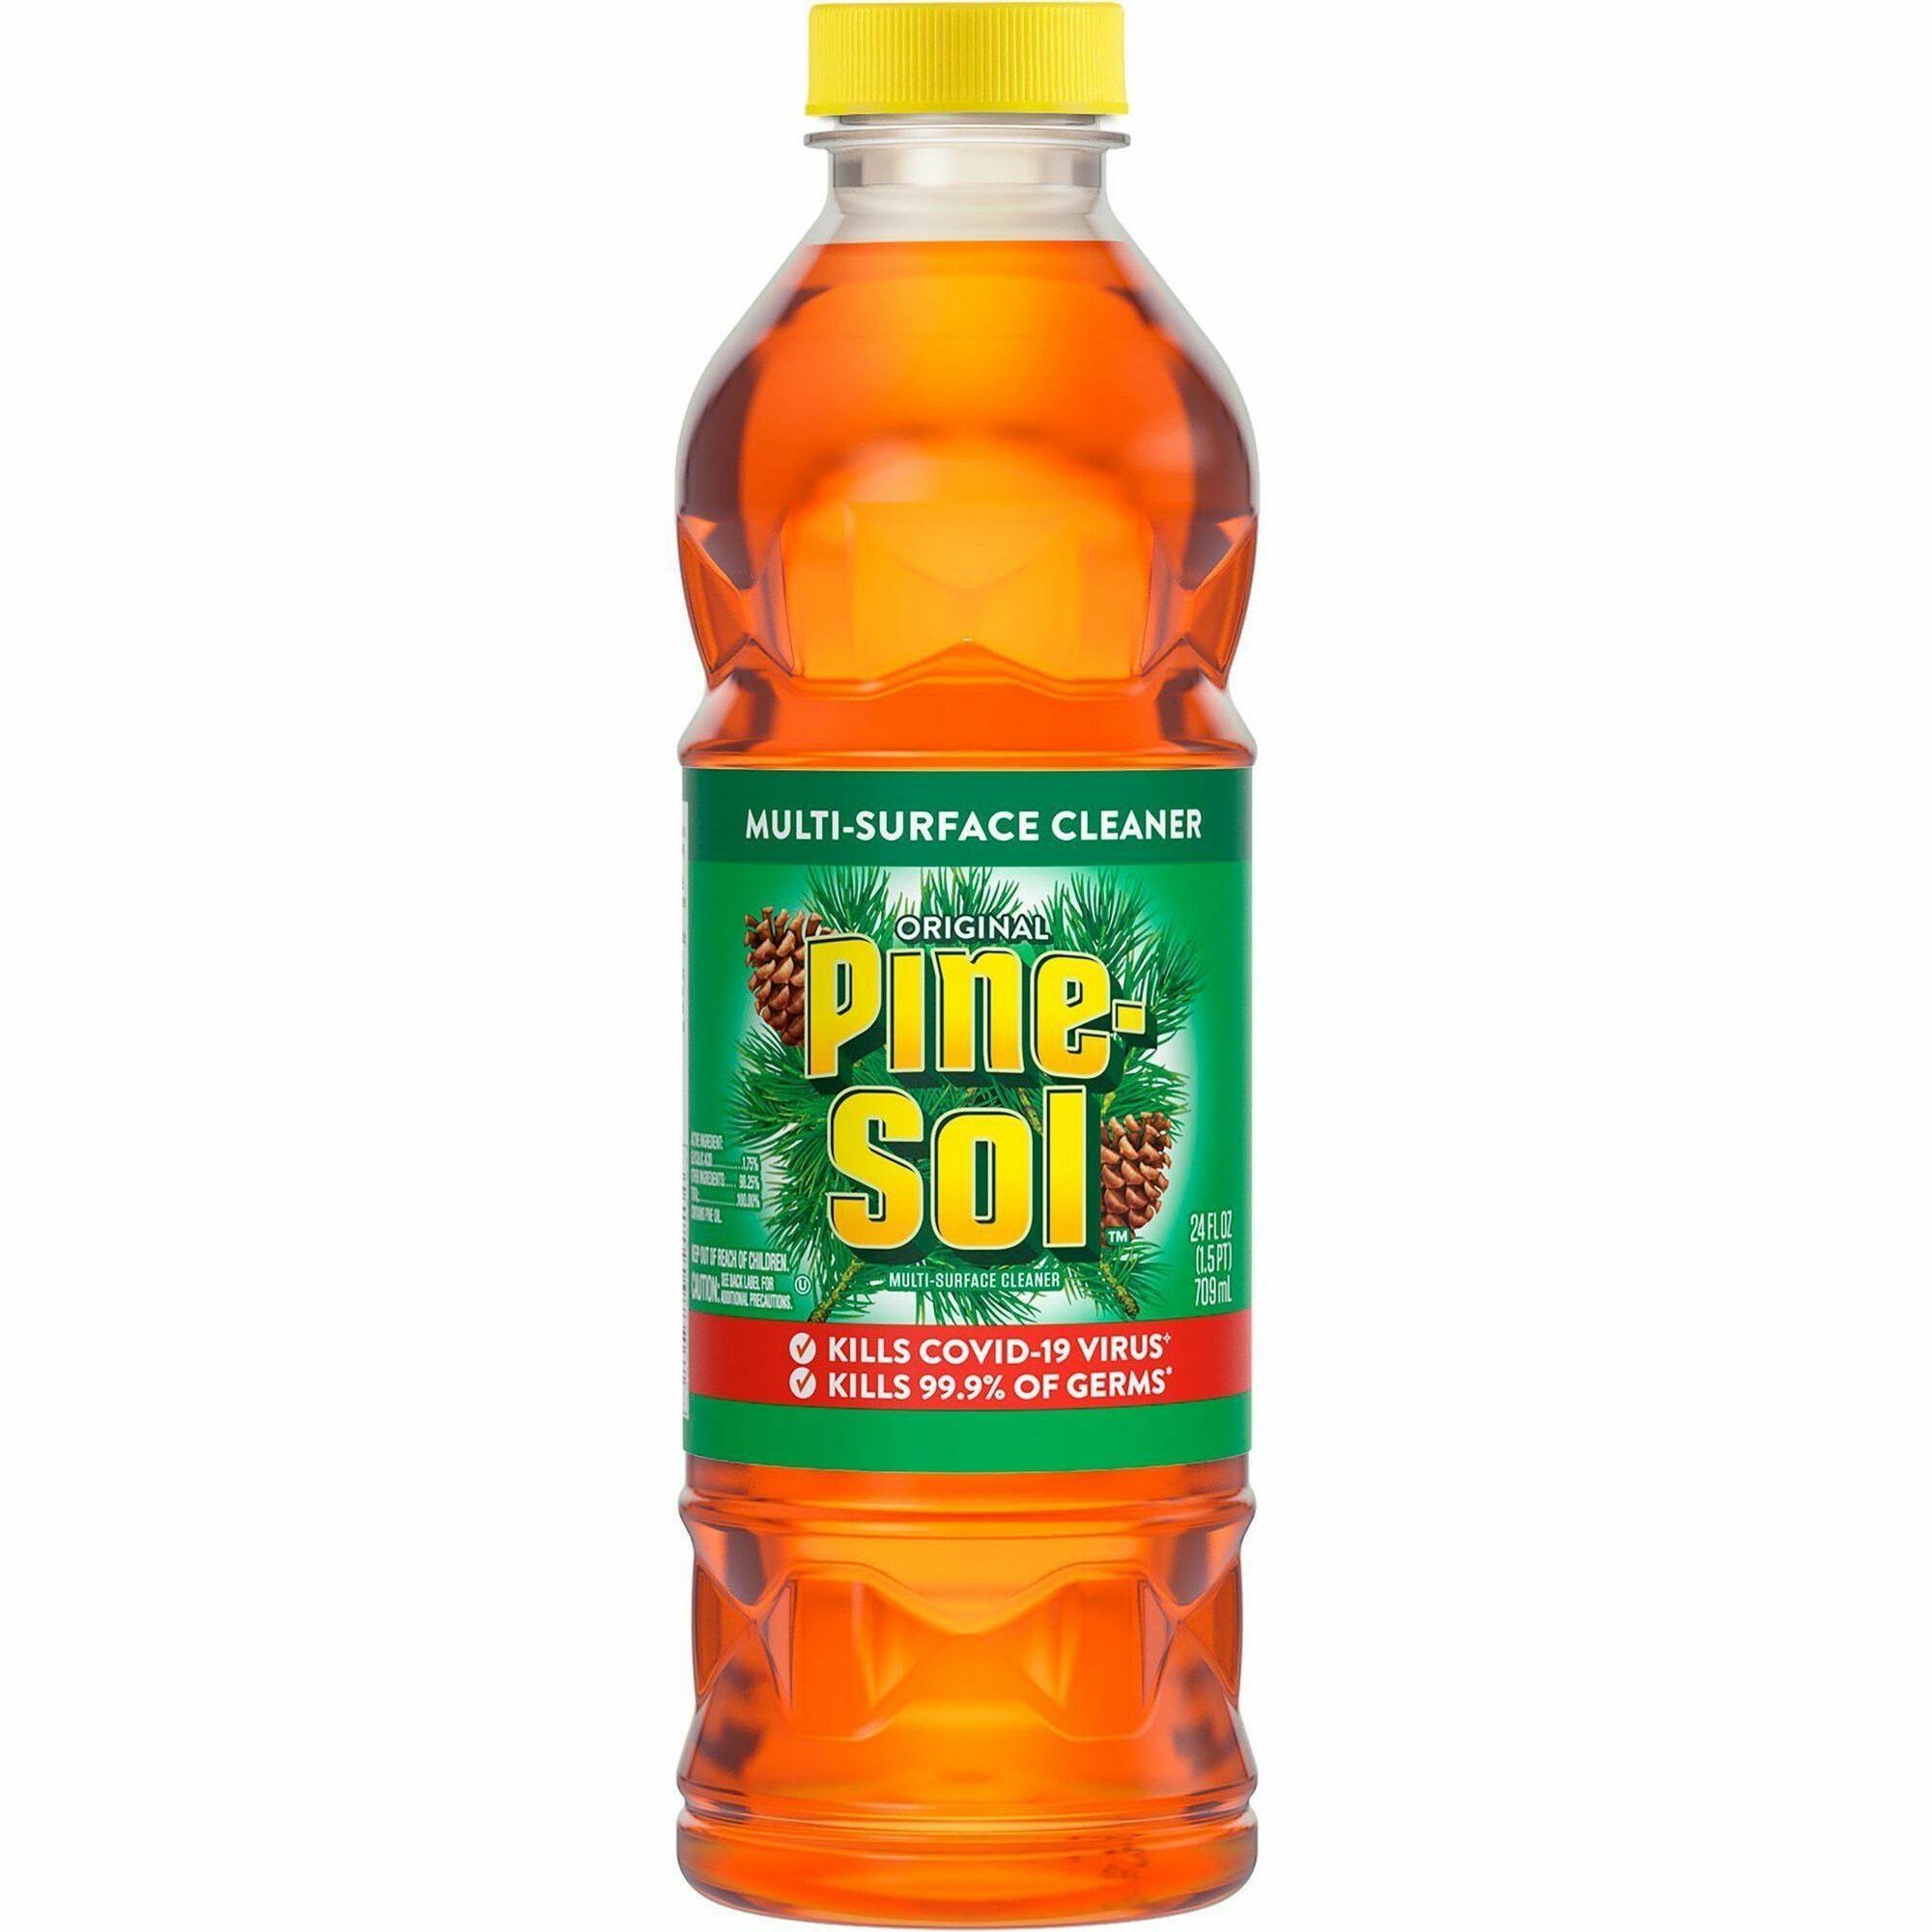 Pine-Sol Original Multi-Surface Cleaner - 24oz